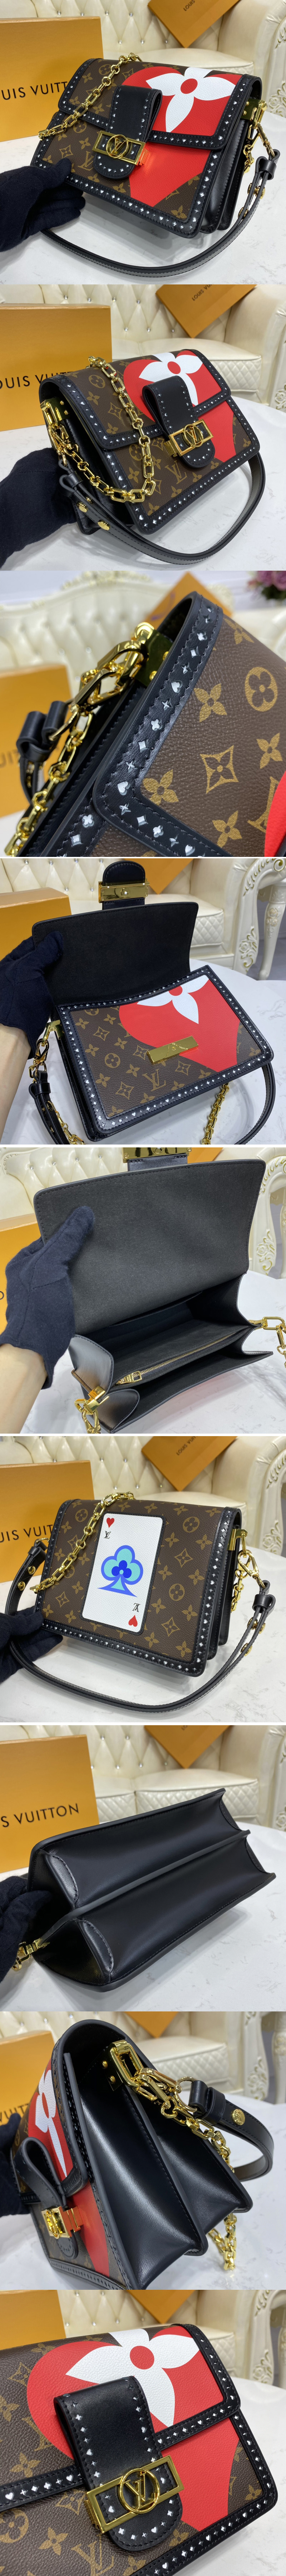 Louis Vuitton N60391 LV Pocket Organizer Wallet in Giant Damier Ebene  coated canvas Replica sale online ,buy fake bag